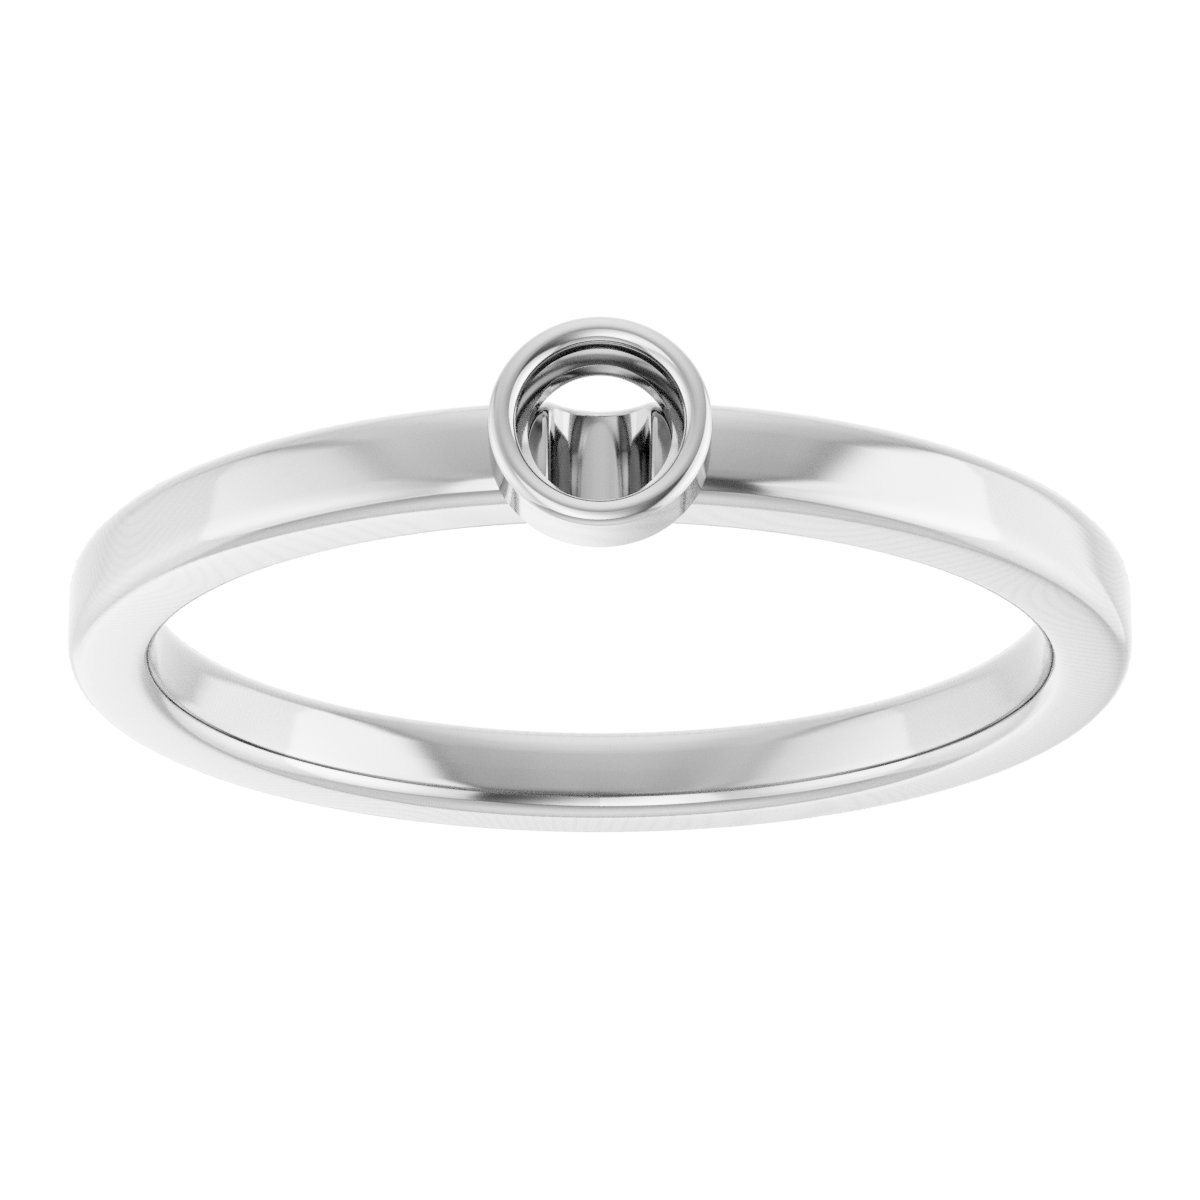 14K White 1/10 CTW Diamond Ring